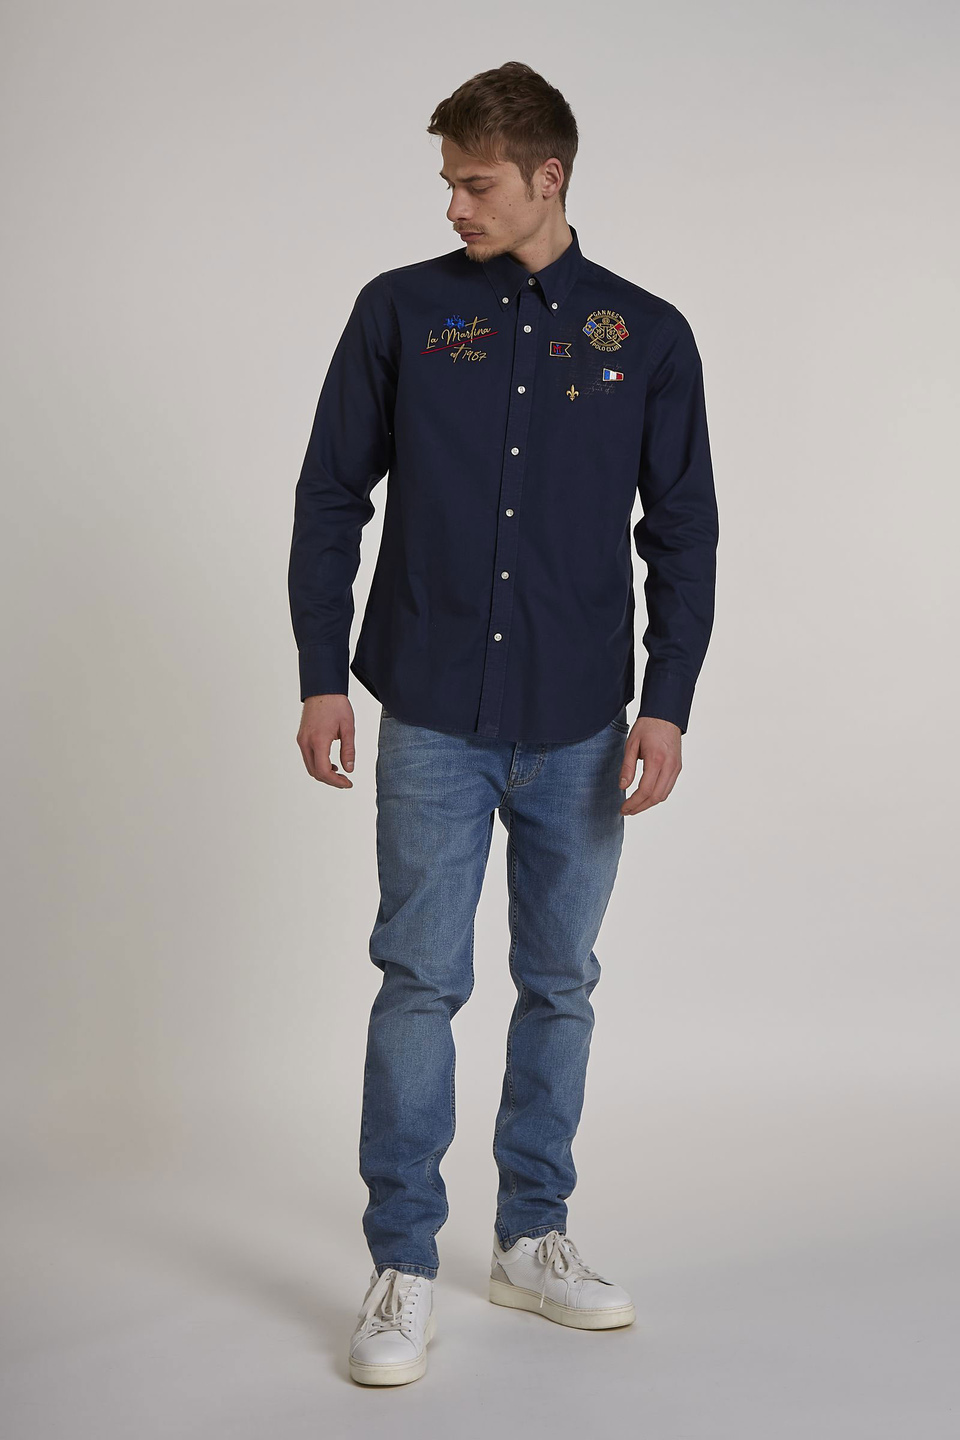 Camicia da uomo in cotone a maniche lunghe regular fit - La Martina - Official Online Shop